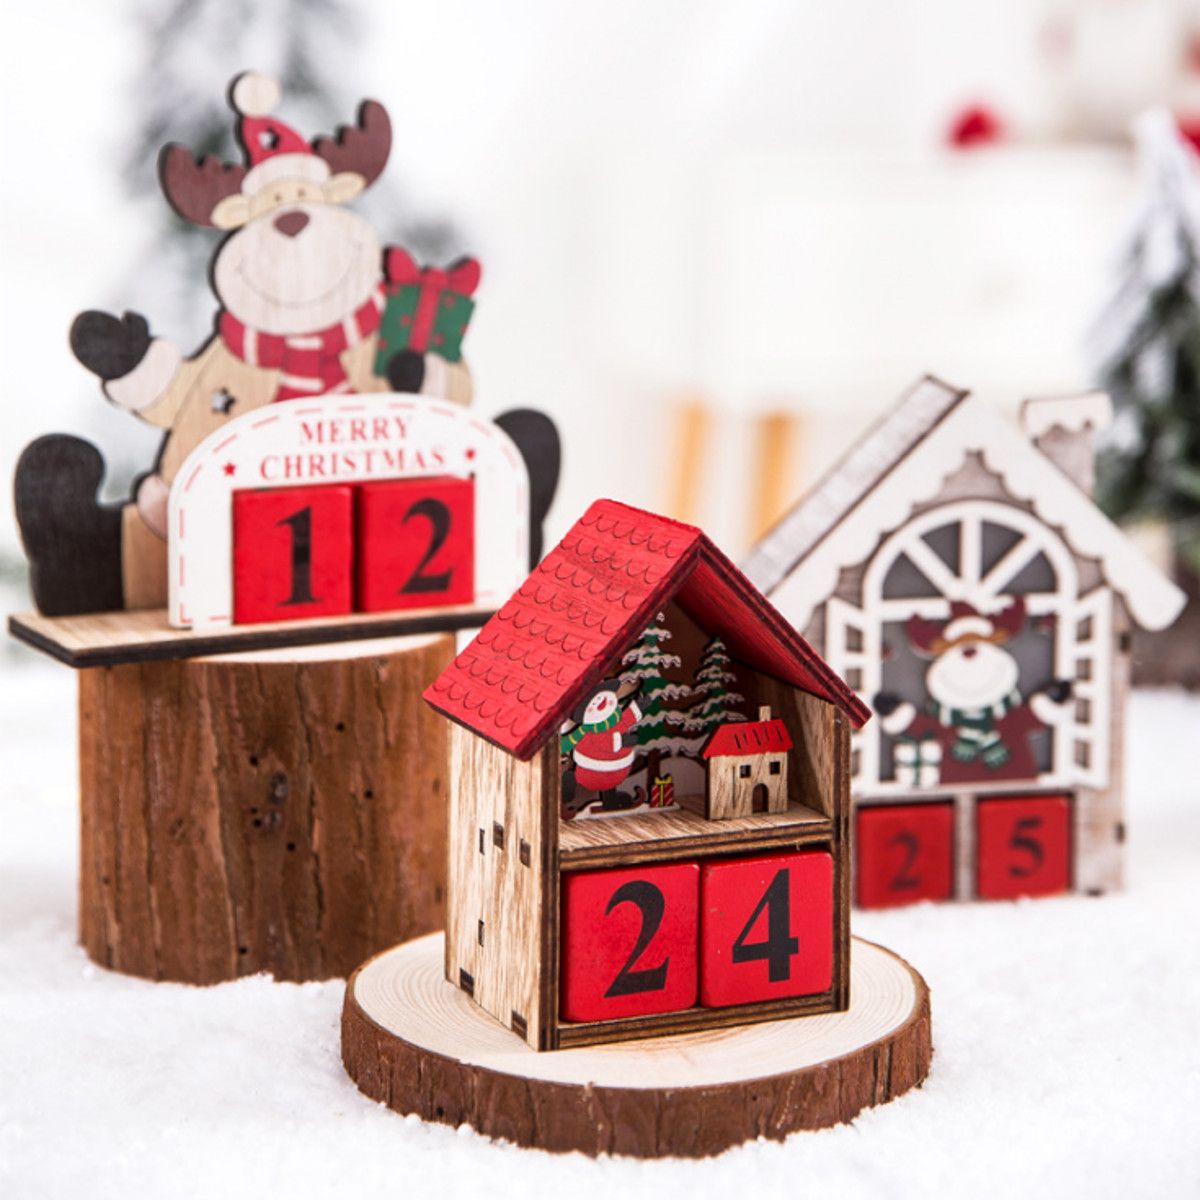 Christmas-Advent-Calendar-LED-Light-Up-Wood-House-Santa-Claus-Snowman-Home-Decoration-1761640